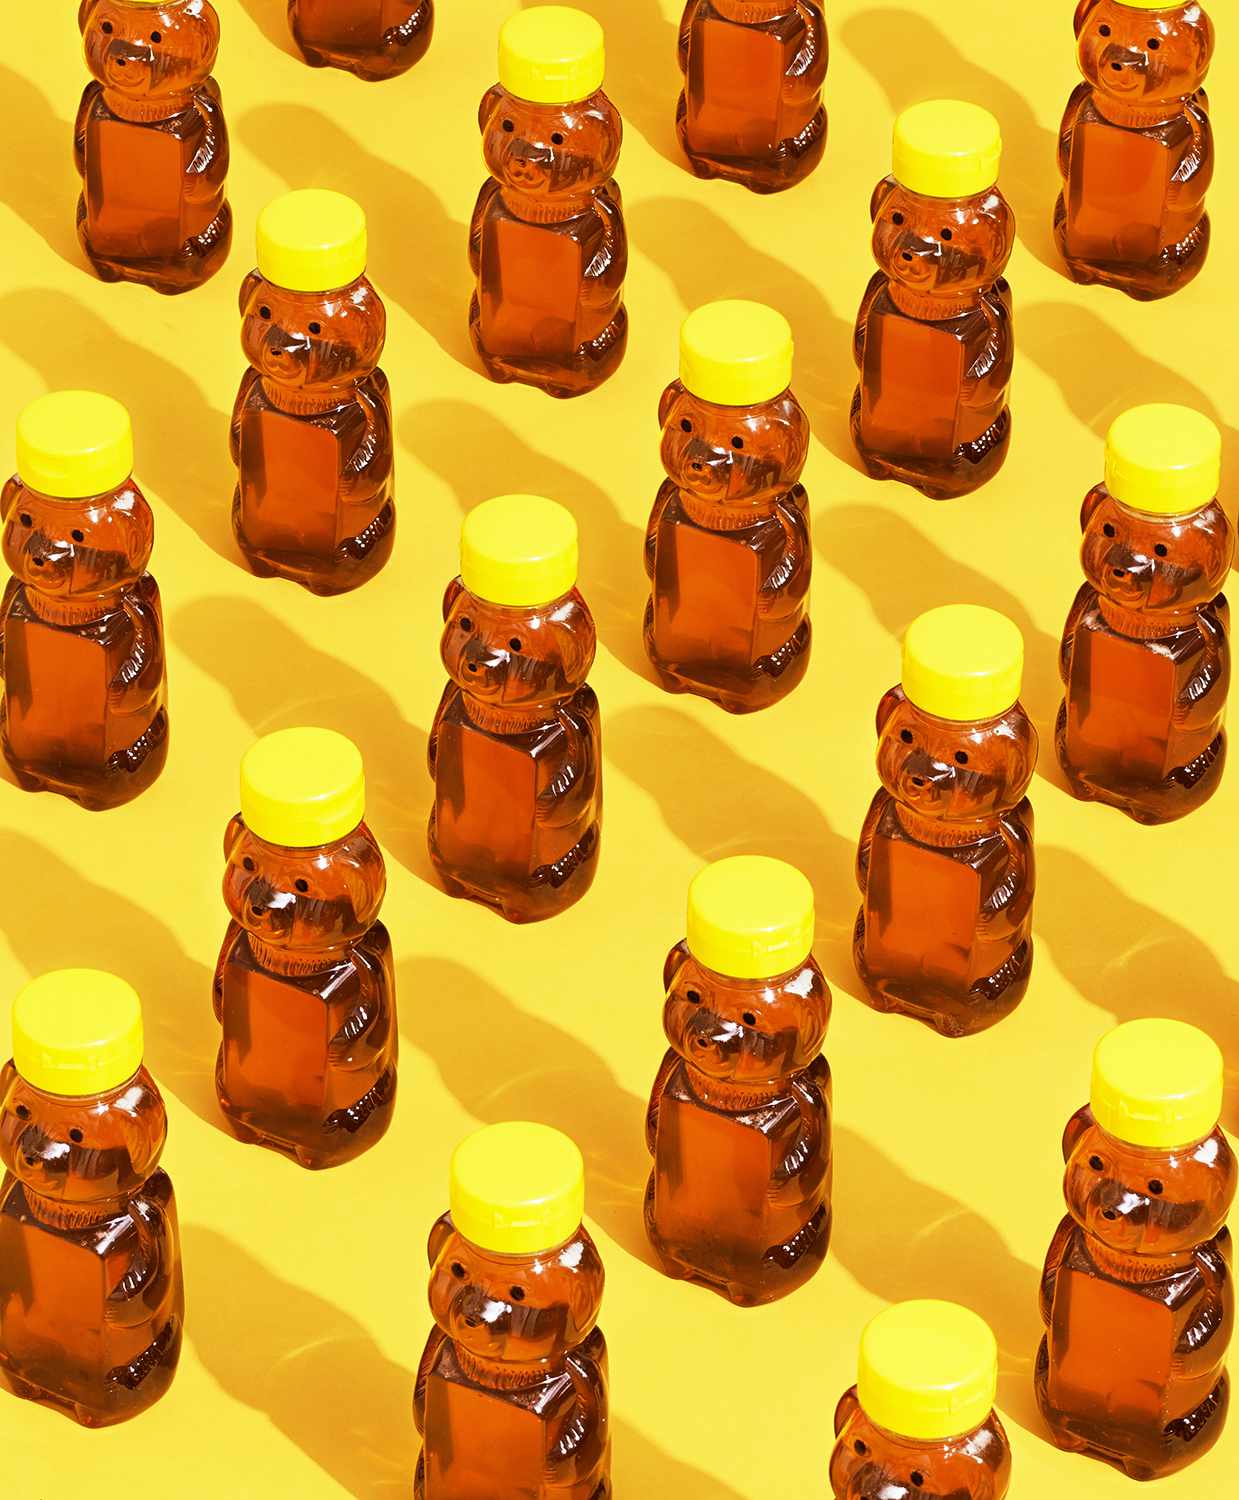 Honey bears